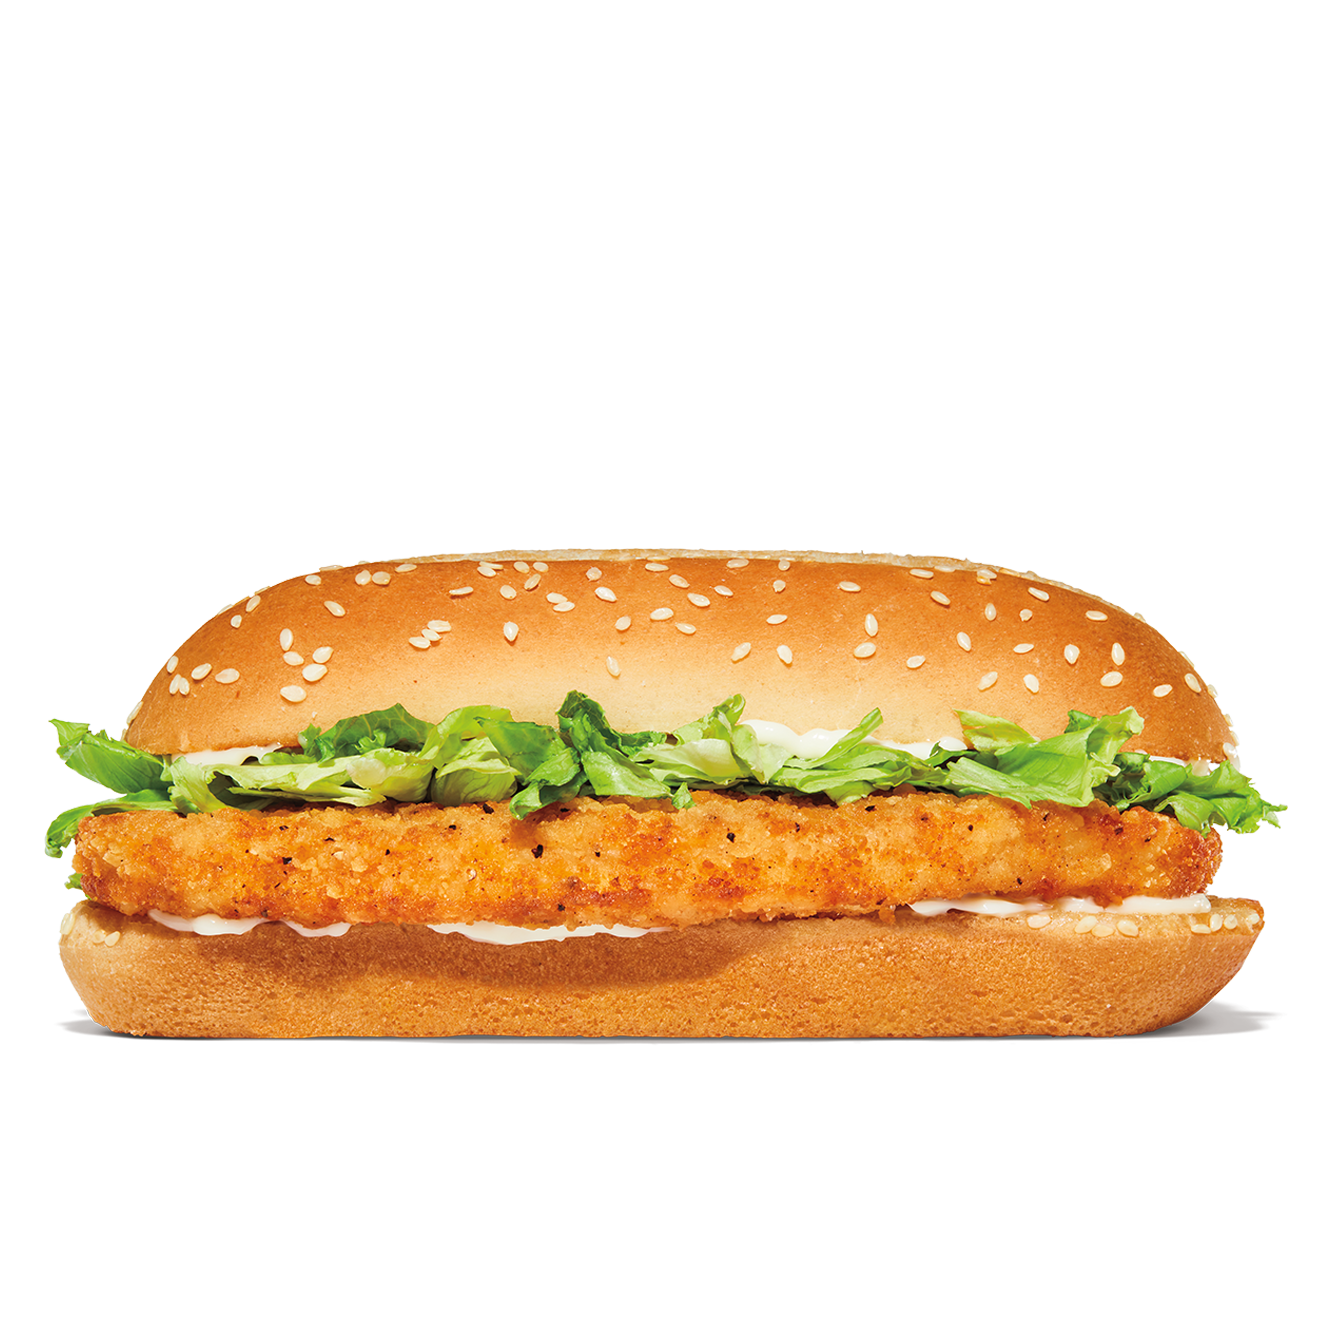 Burger King Torrance (310)539-0180